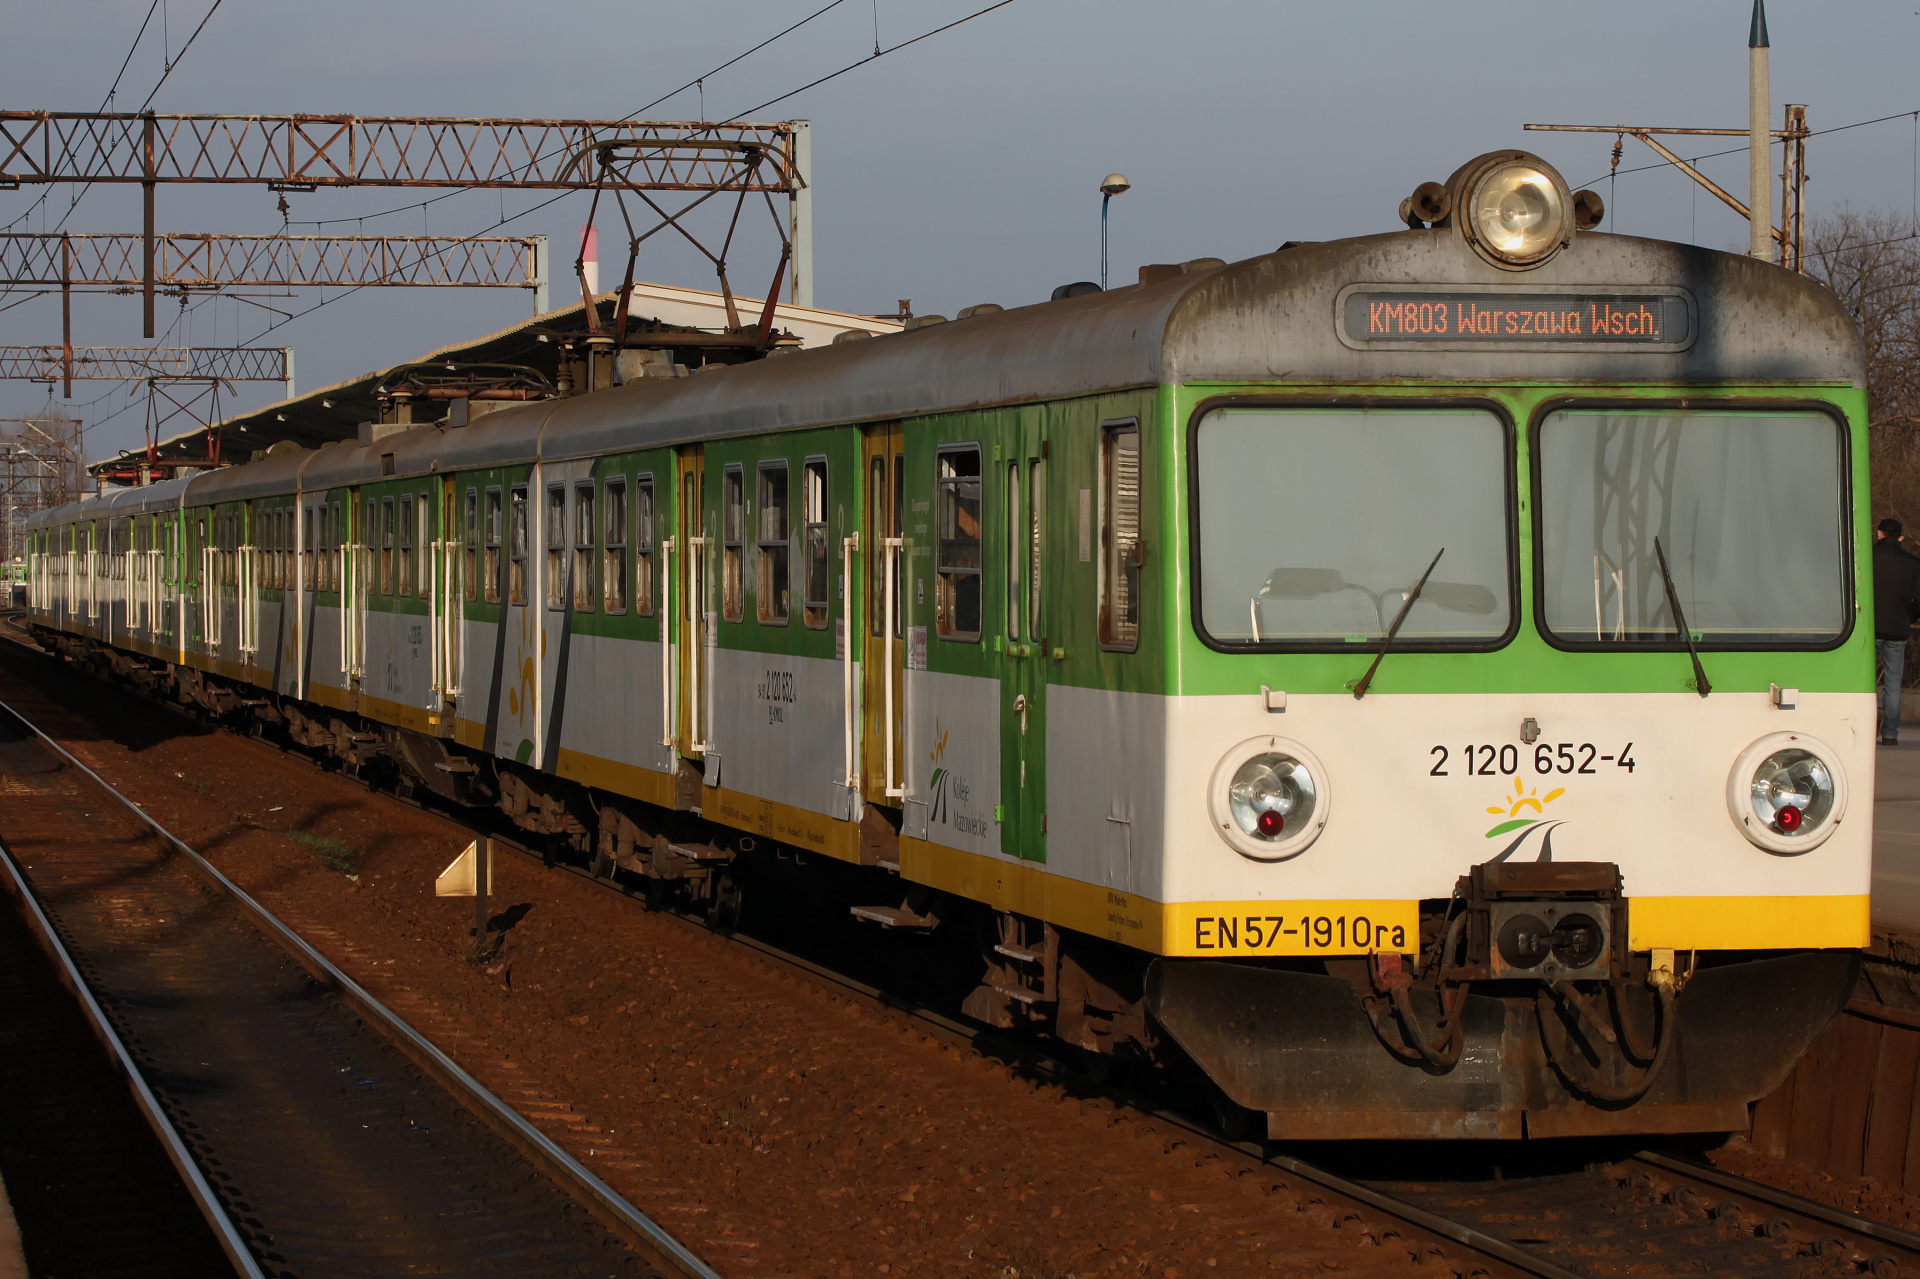 EN57-1910 (Vehicles » Trains and Locomotives » Pafawag 5B/6B EN57 and revisions)